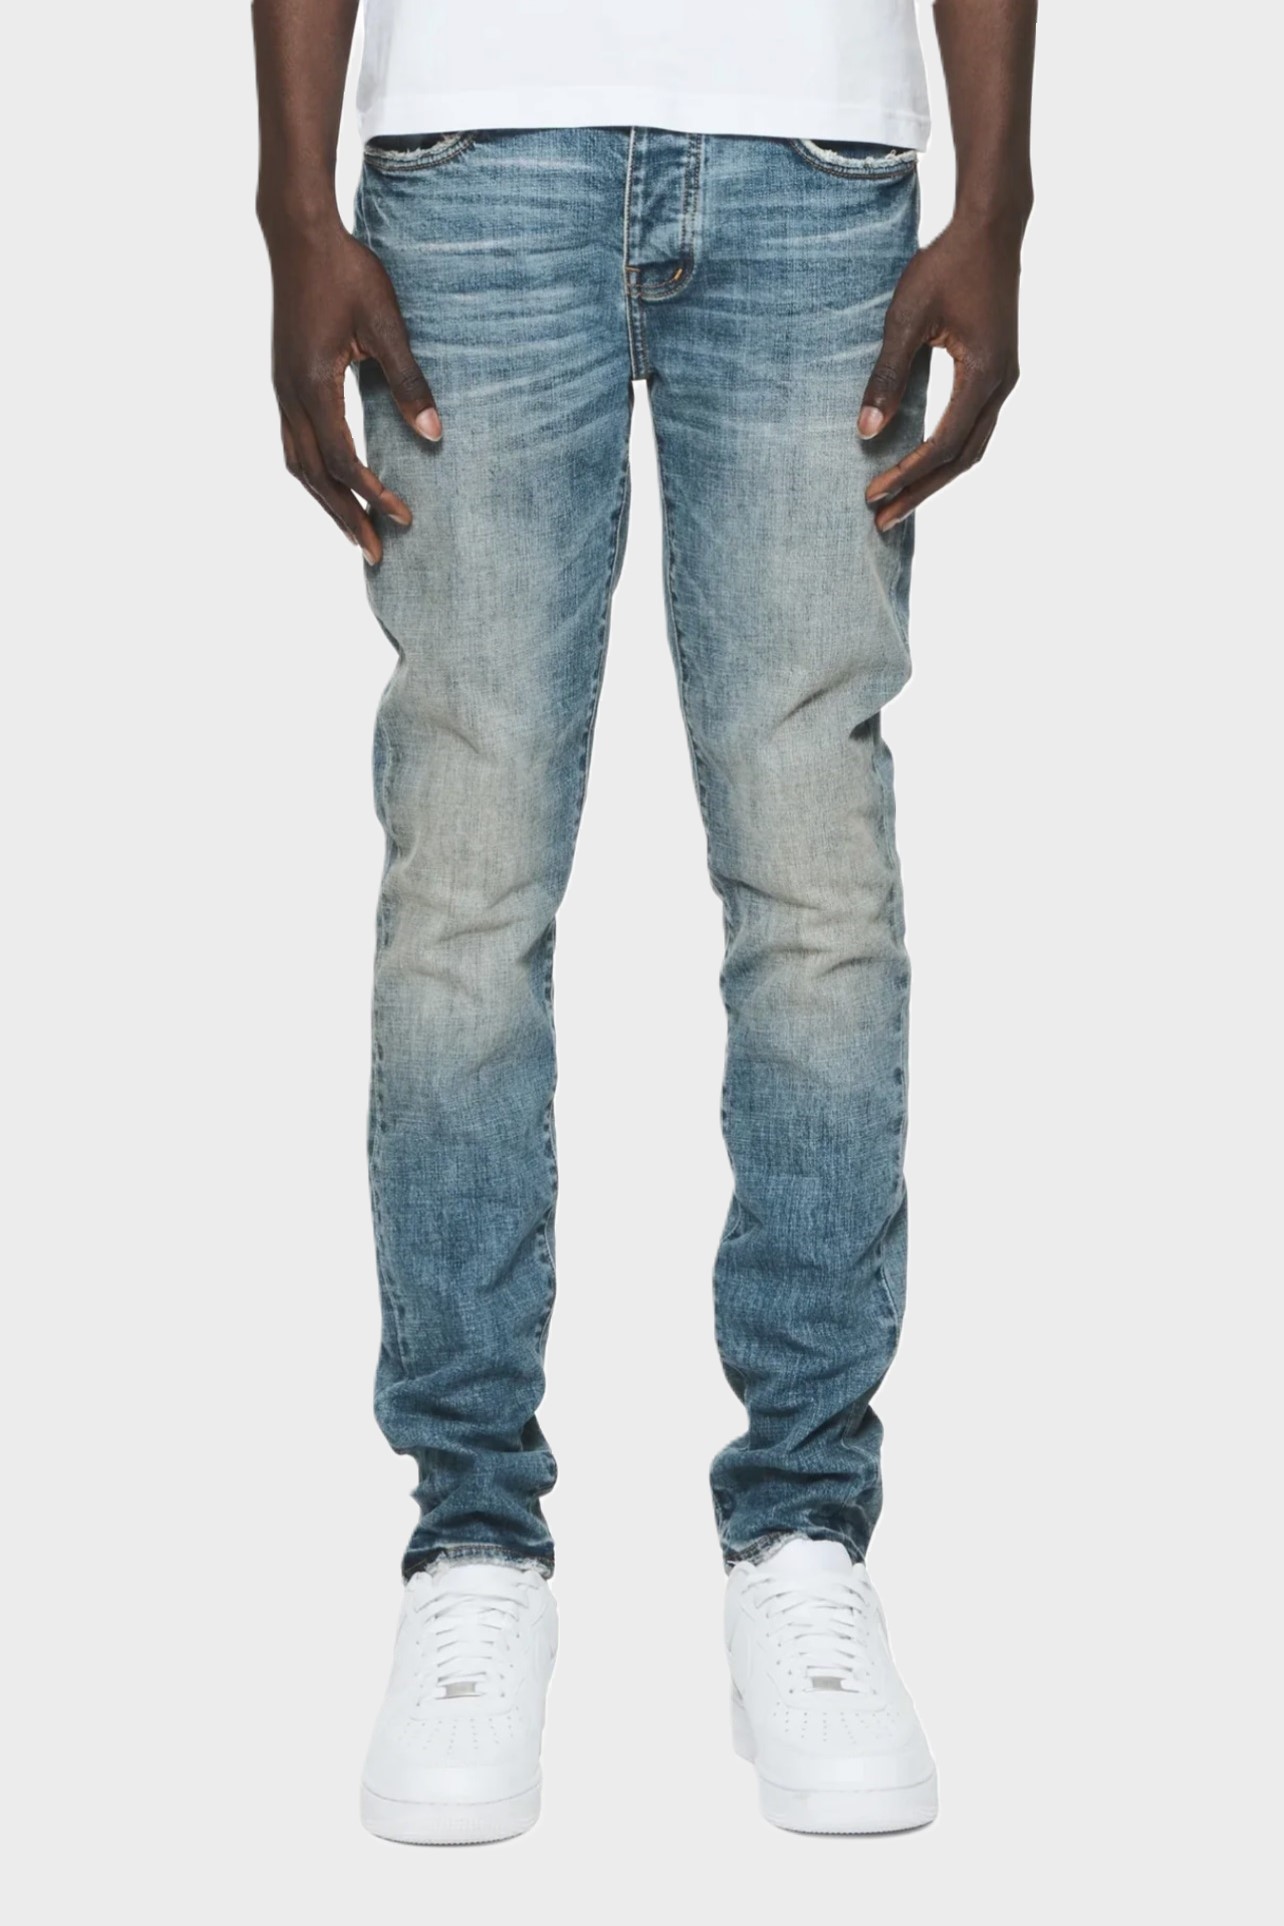 PURPLE-BRAND Jeans P005 in Mid Indigo